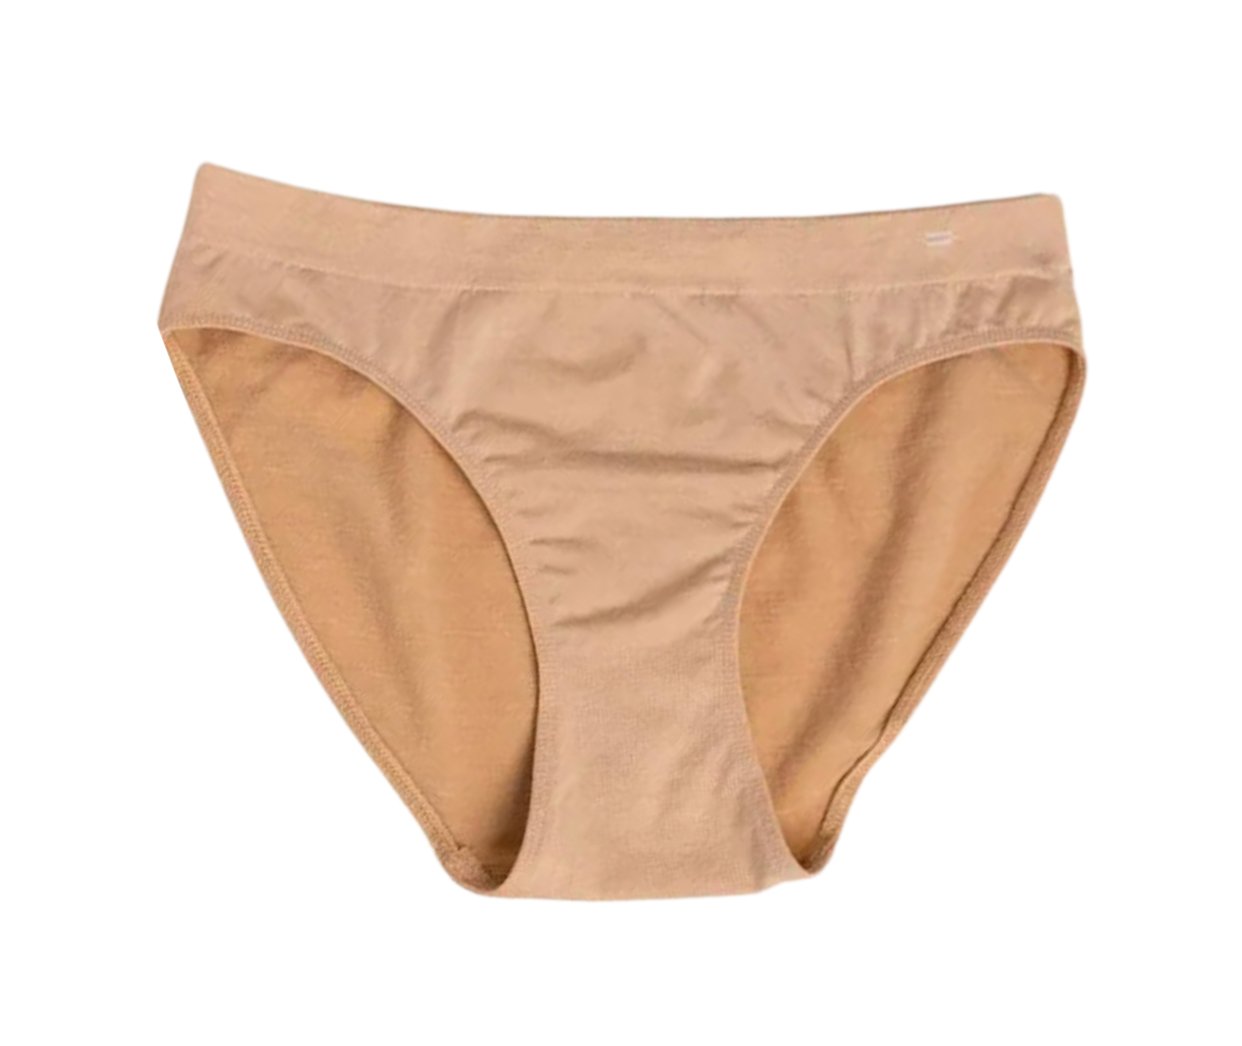 Peach's panties : r/tumblr